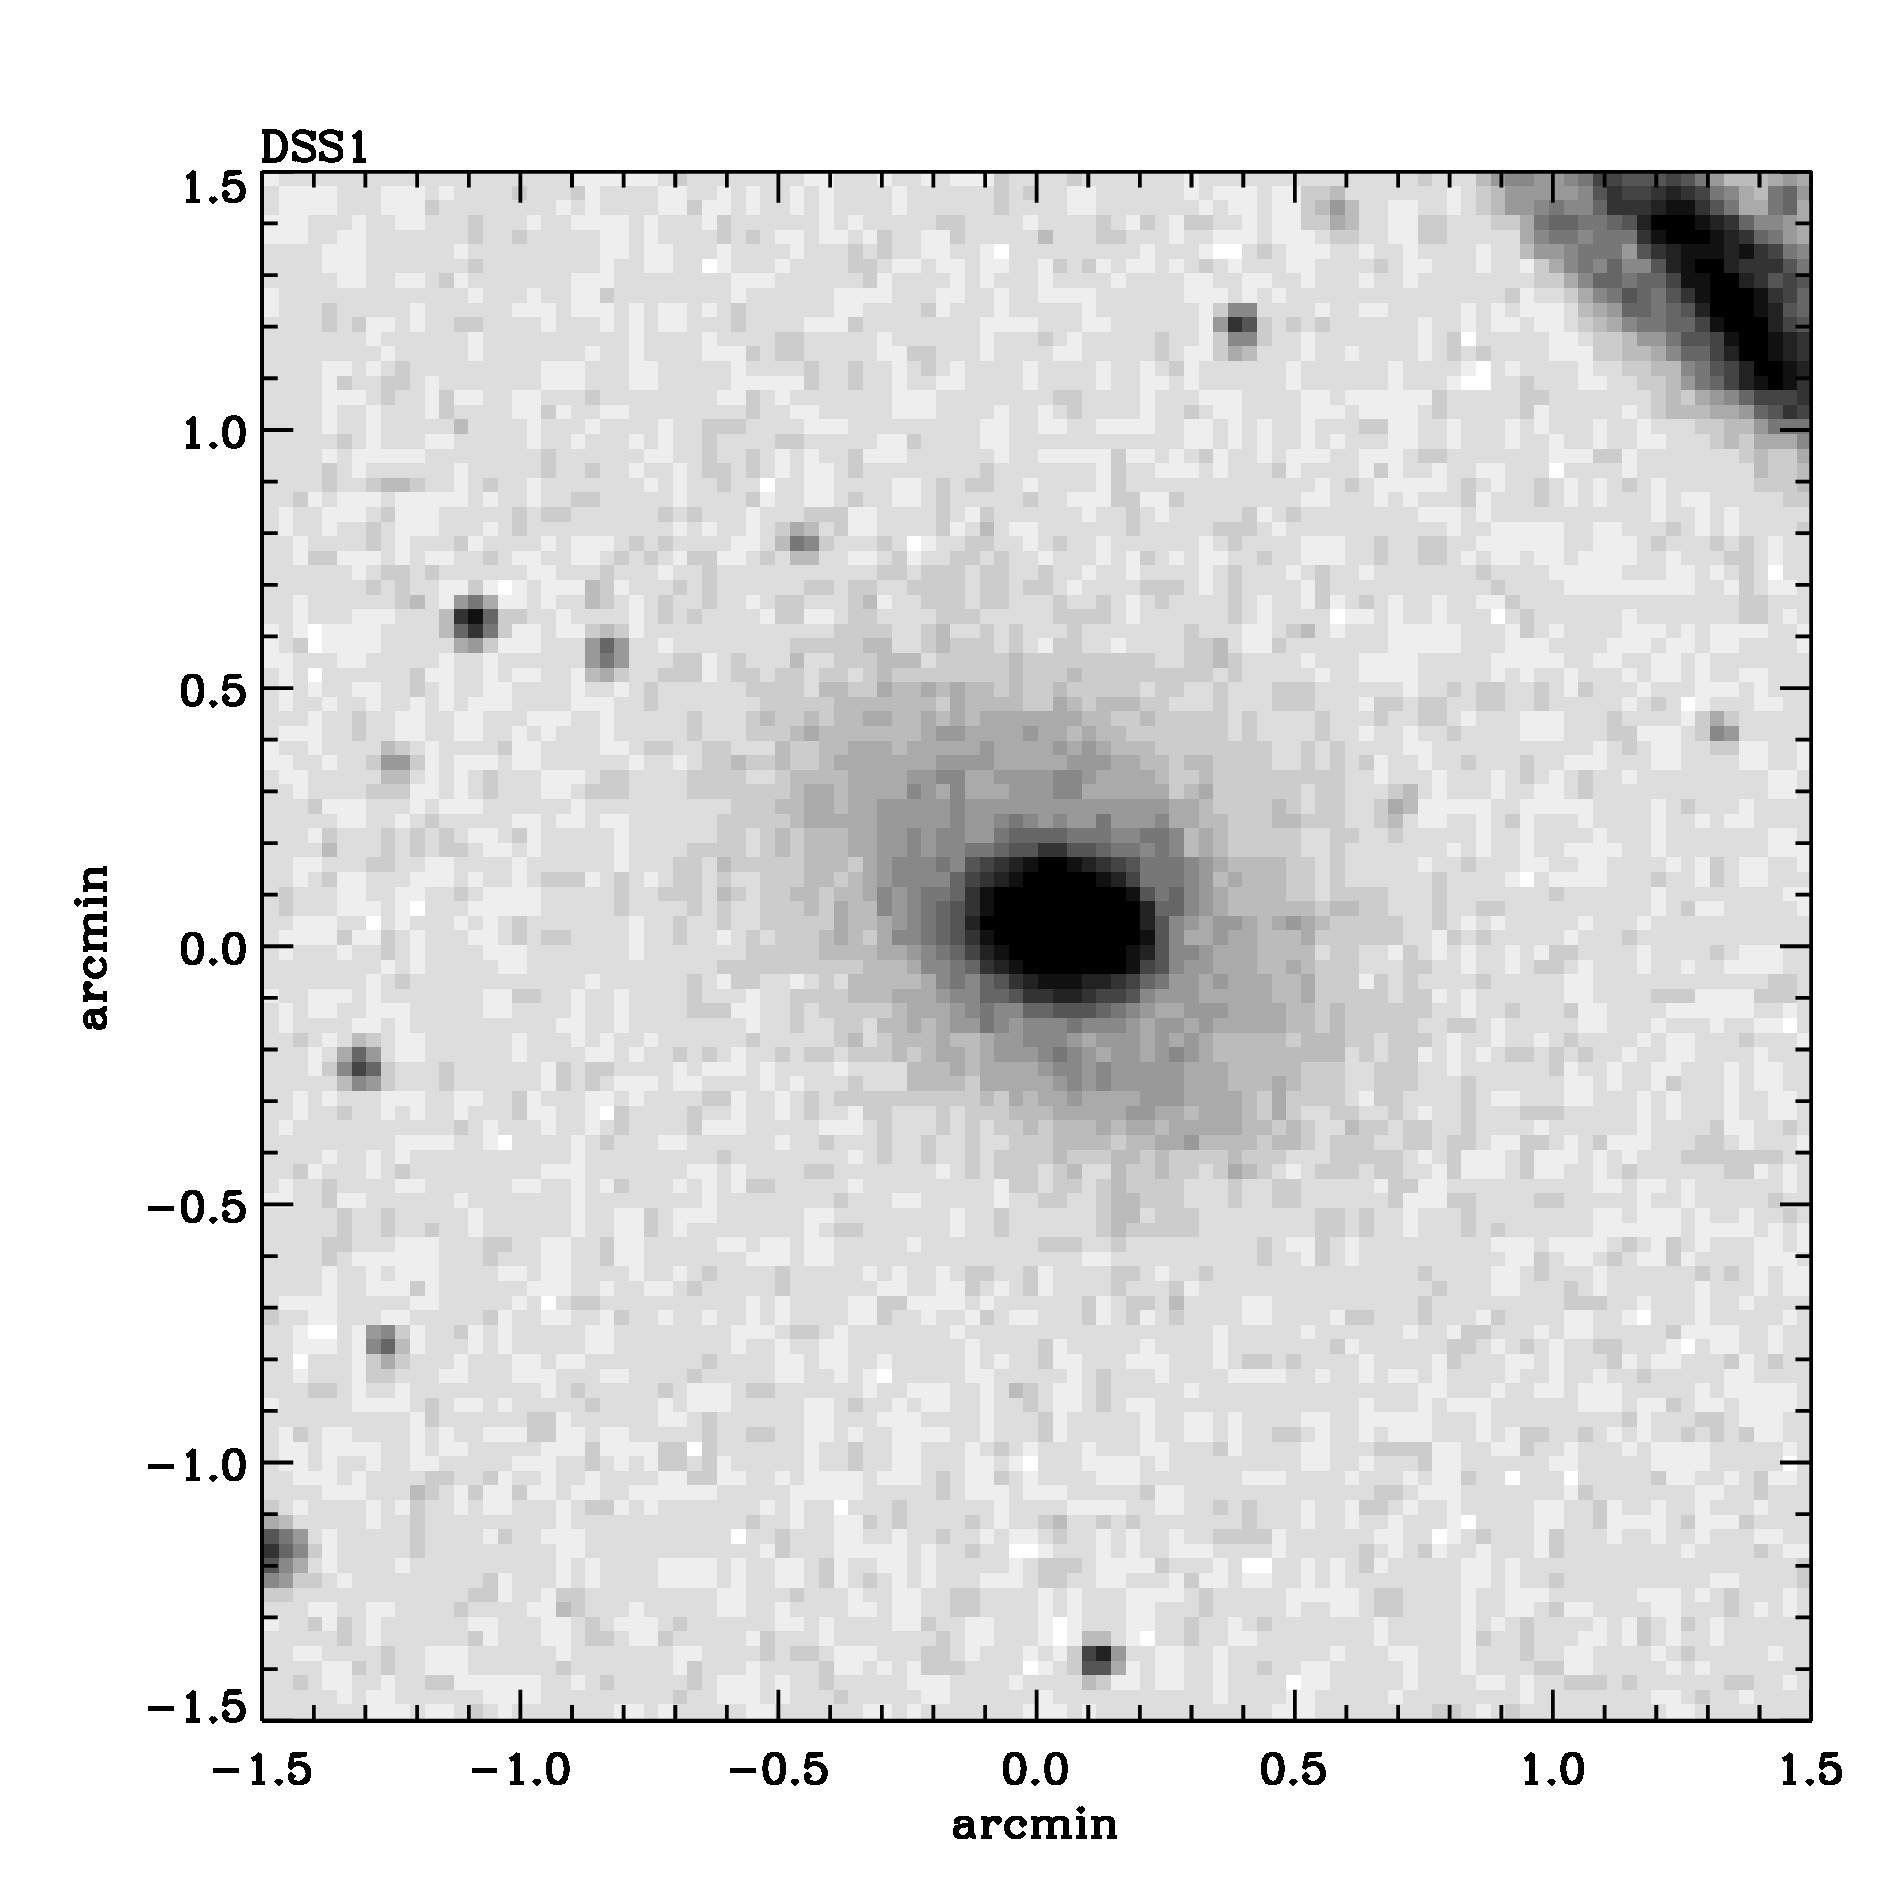 Optical image for SWIFT J1322.2-1641